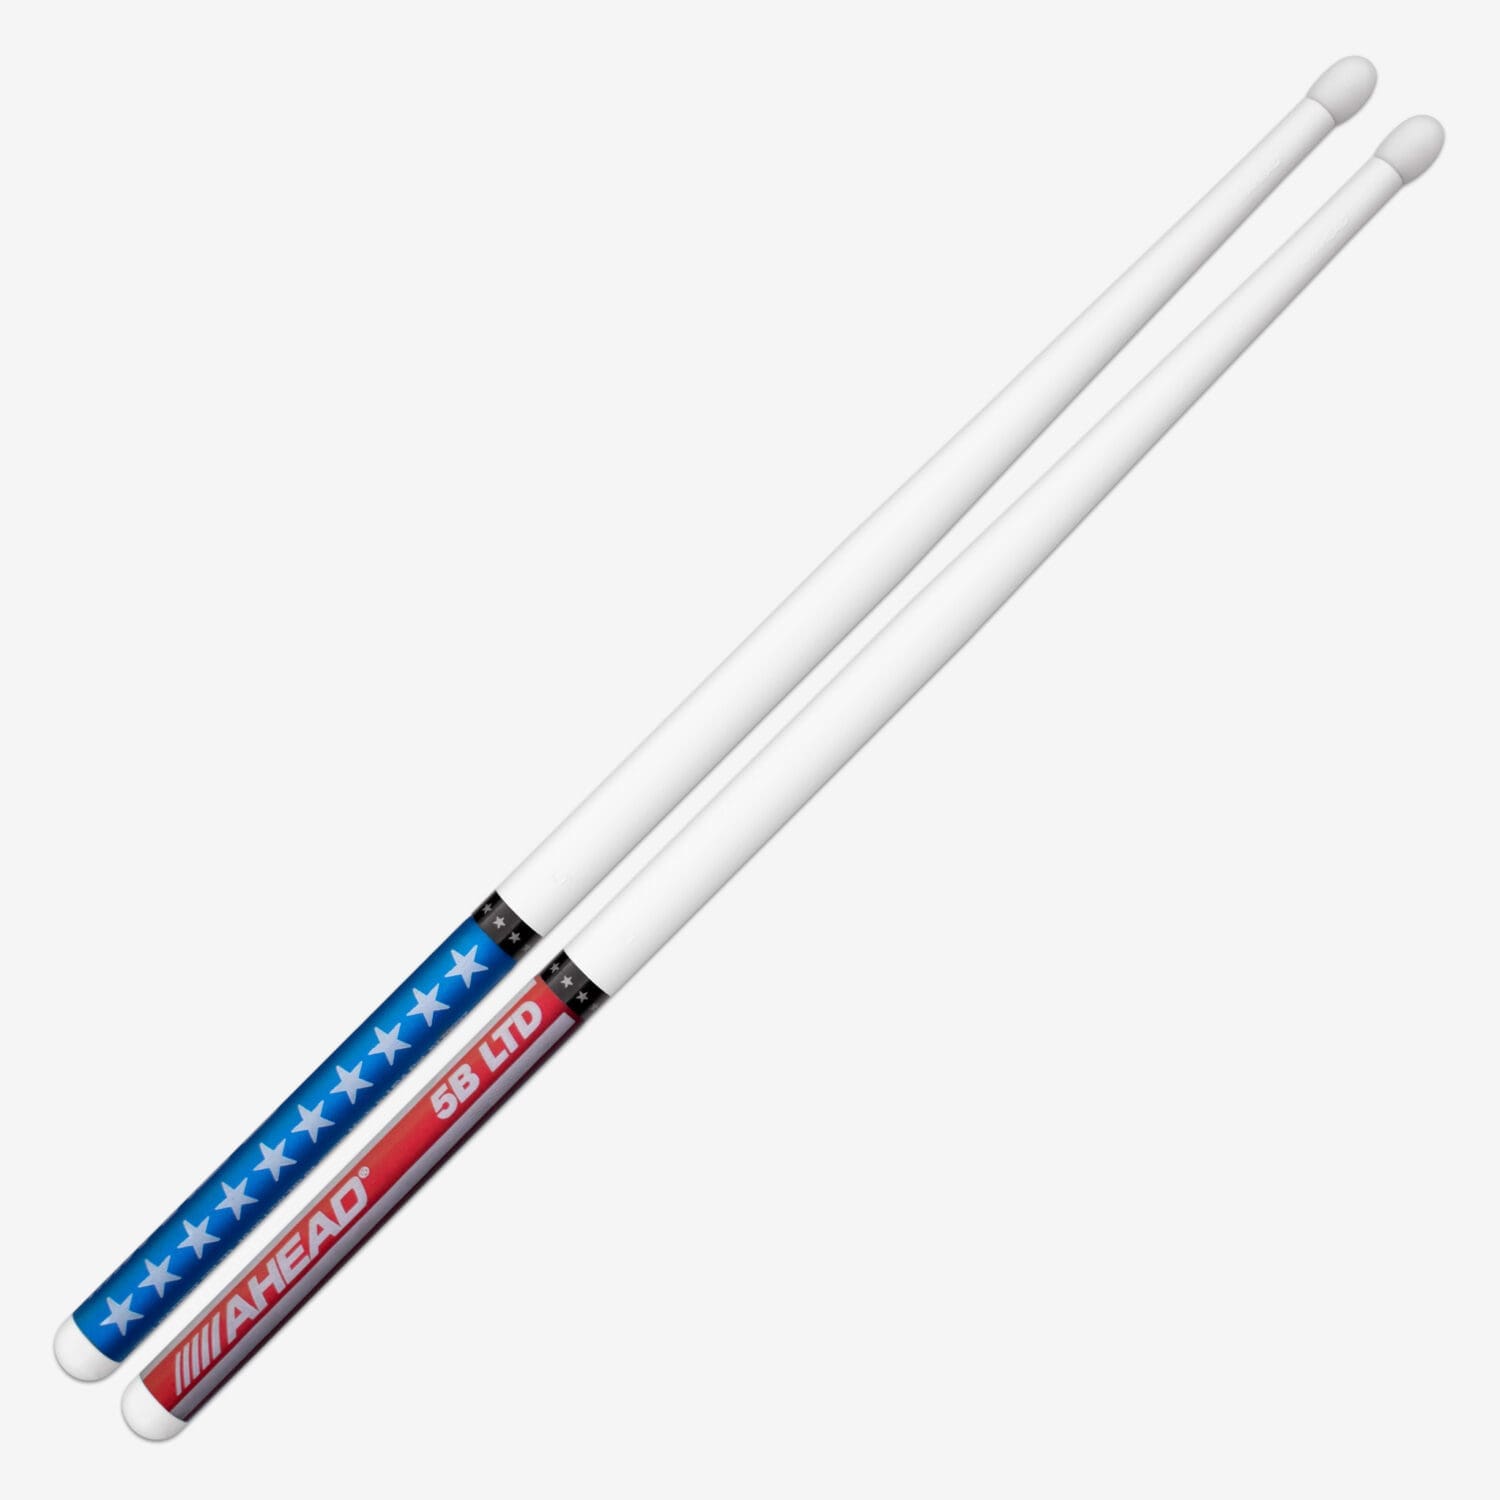 Patriot Limited Edition 5B Drumsticks